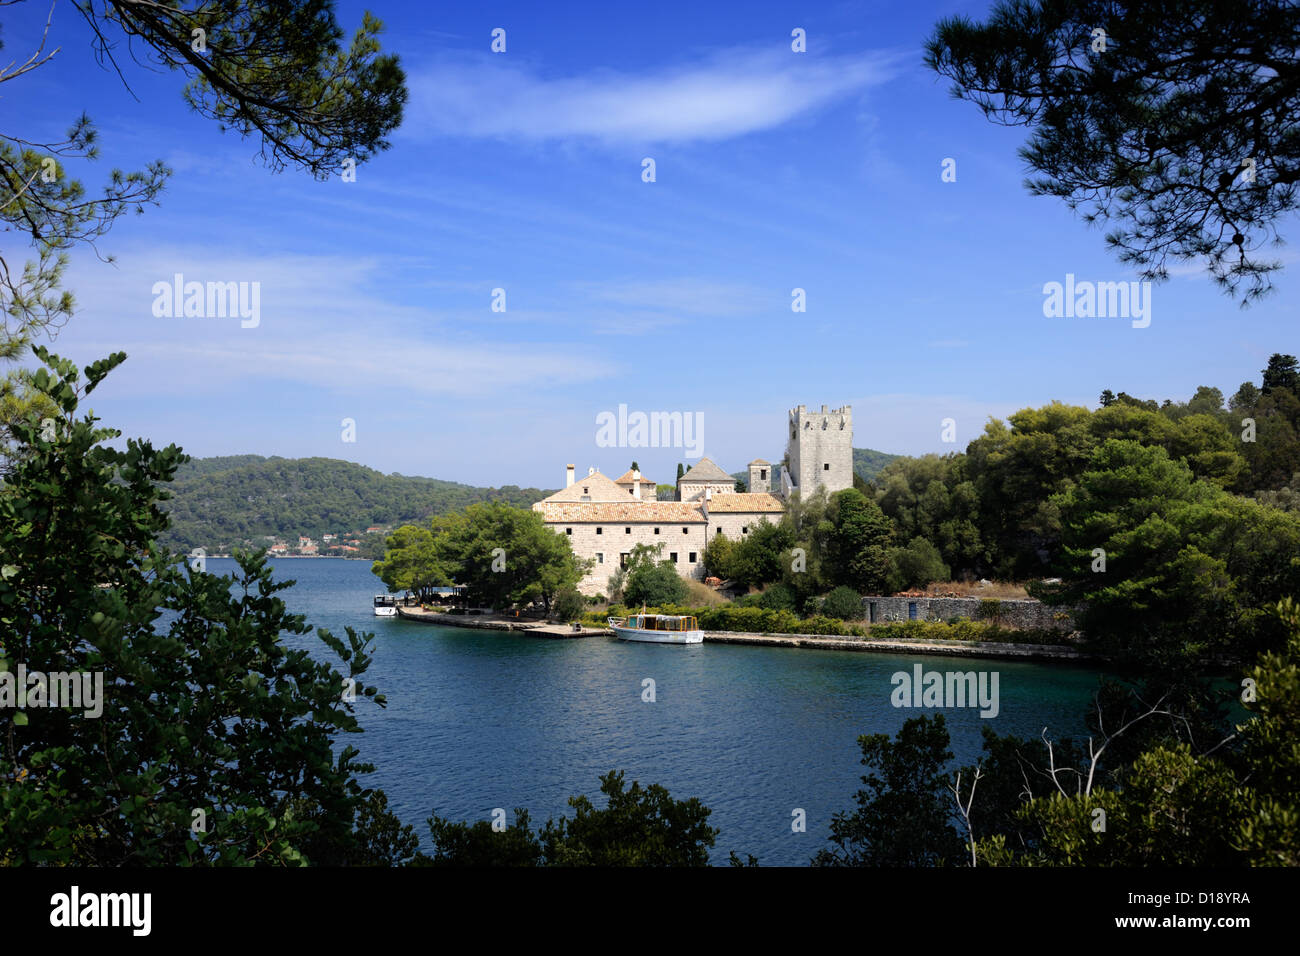 croatia, dalmatia, mljet island, monastery Stock Photo